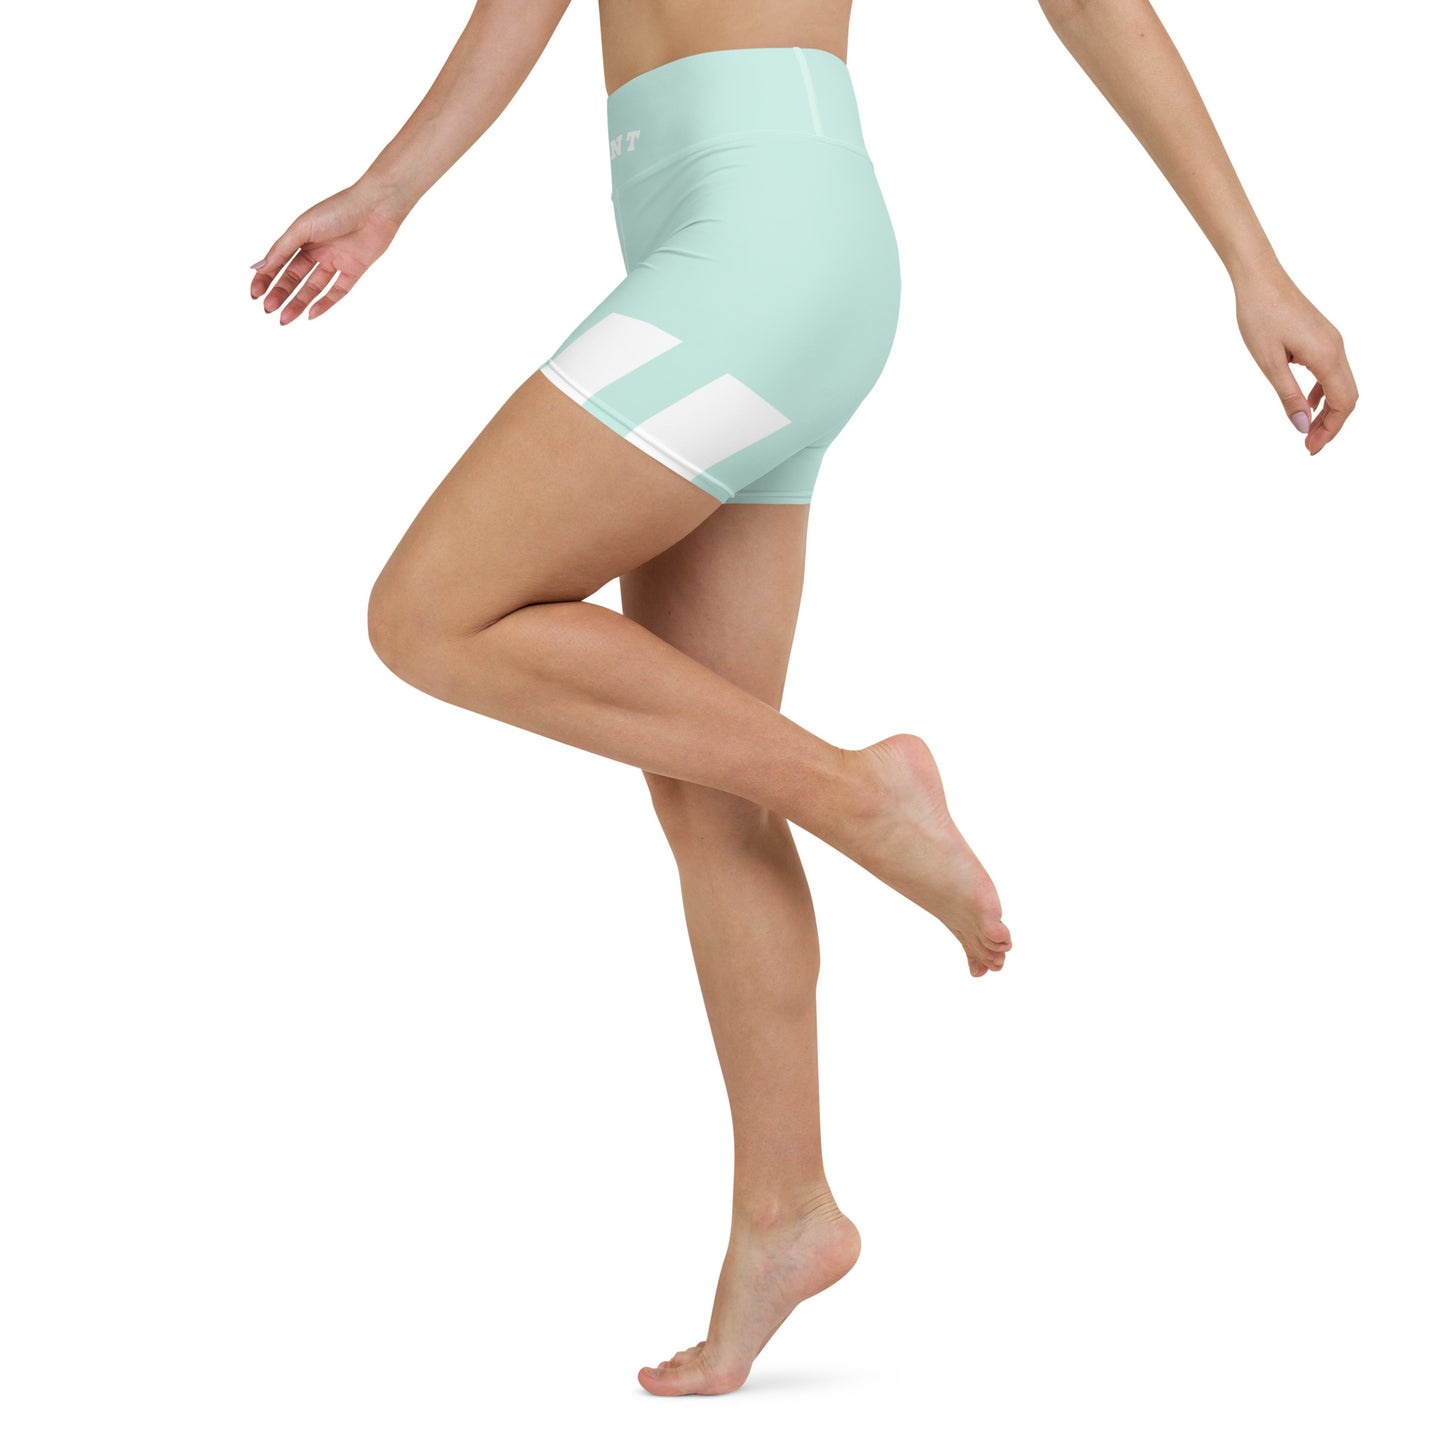 Mint Soft-blend Athletic Yoga Shorts